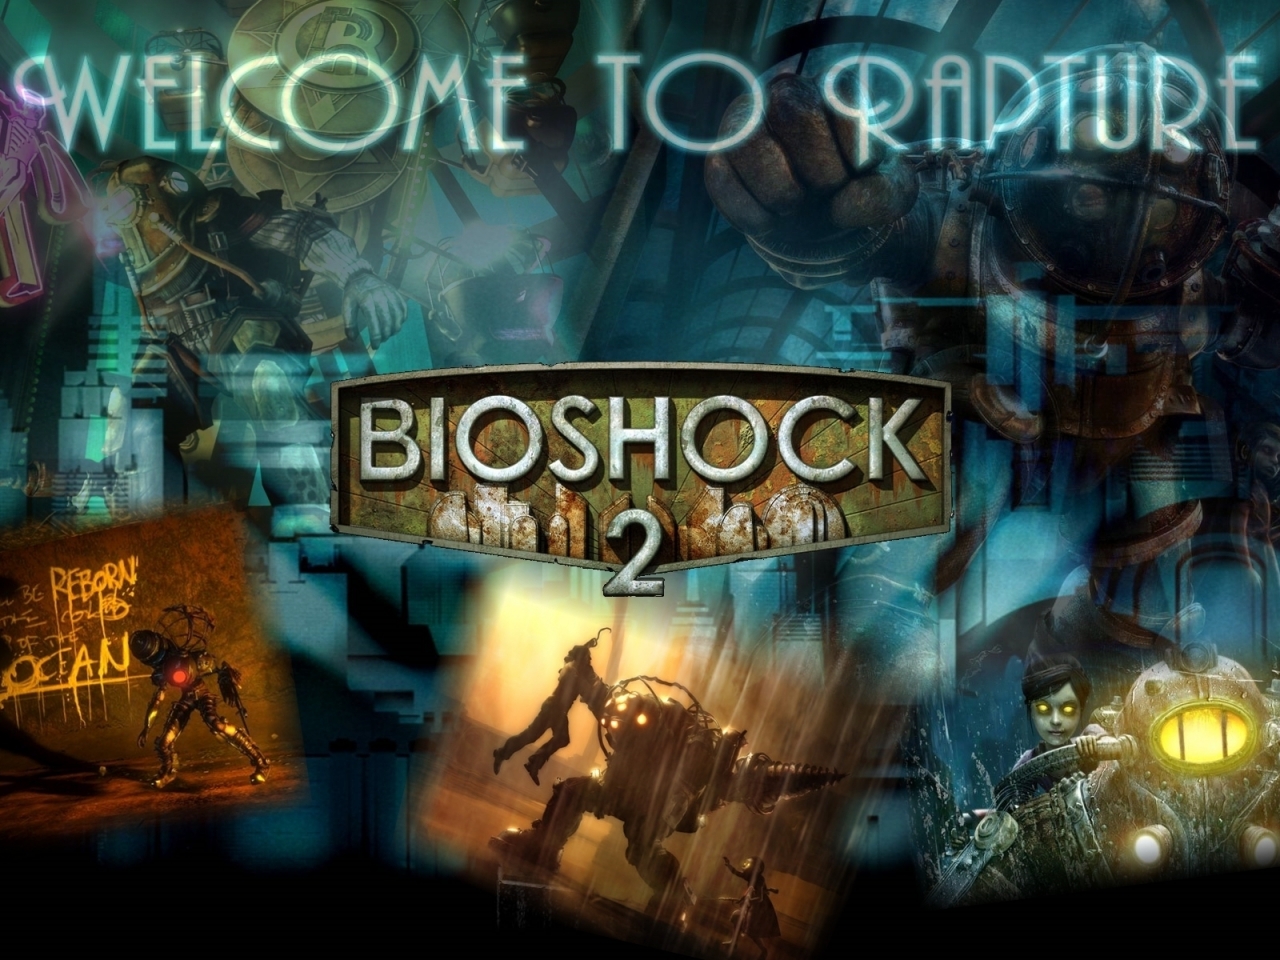 Bioshock 2 for 1280 x 960 resolution